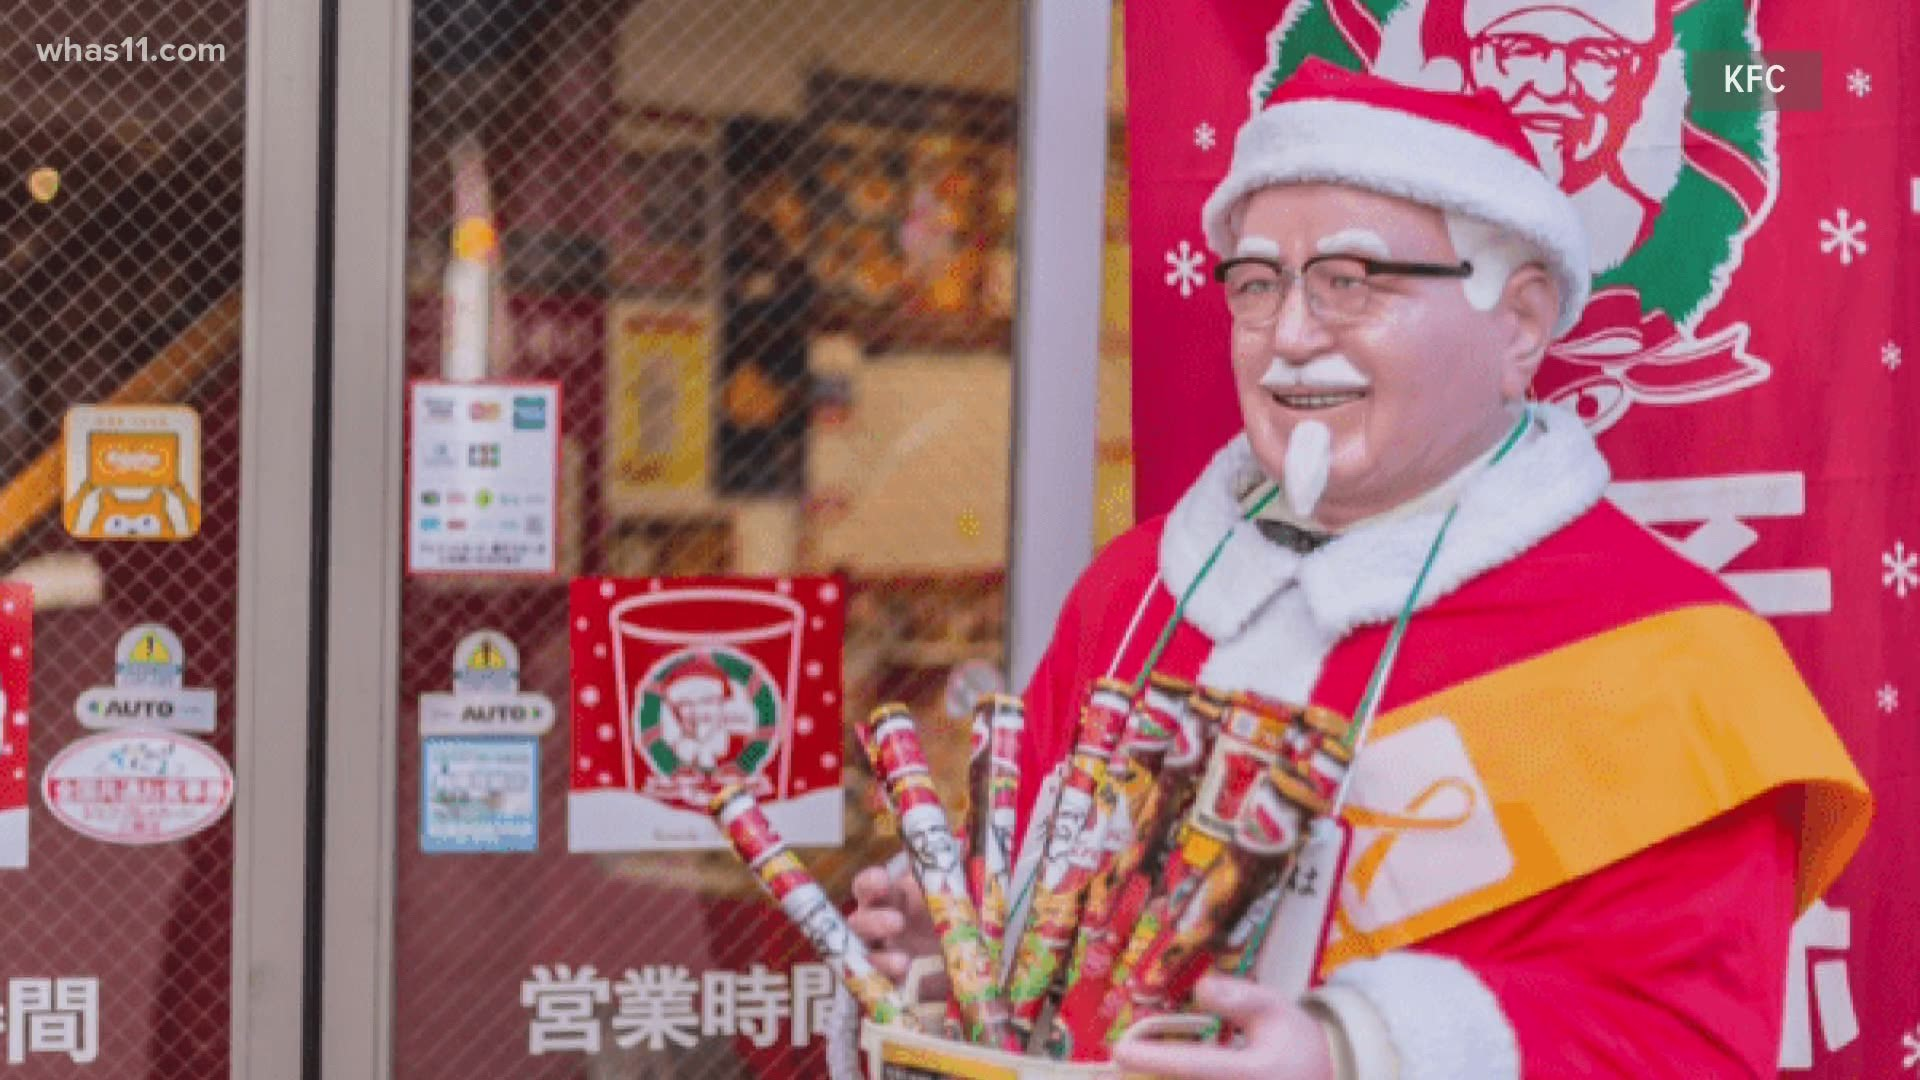 KFC Japan's colonel santa outfits